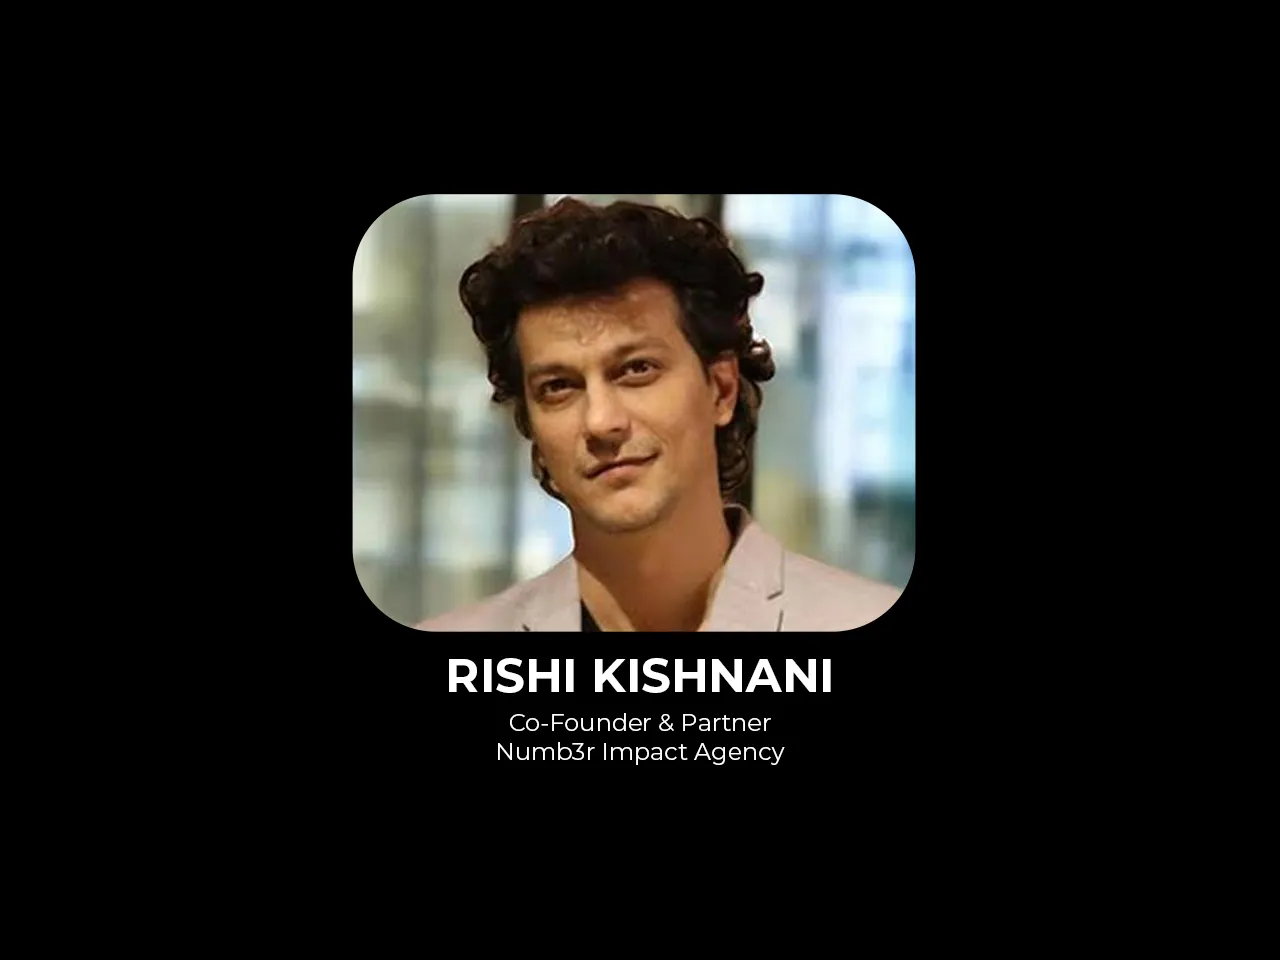 Rishi Kishnani joins Numb3r Impact Agency as Co-Founder & Partner